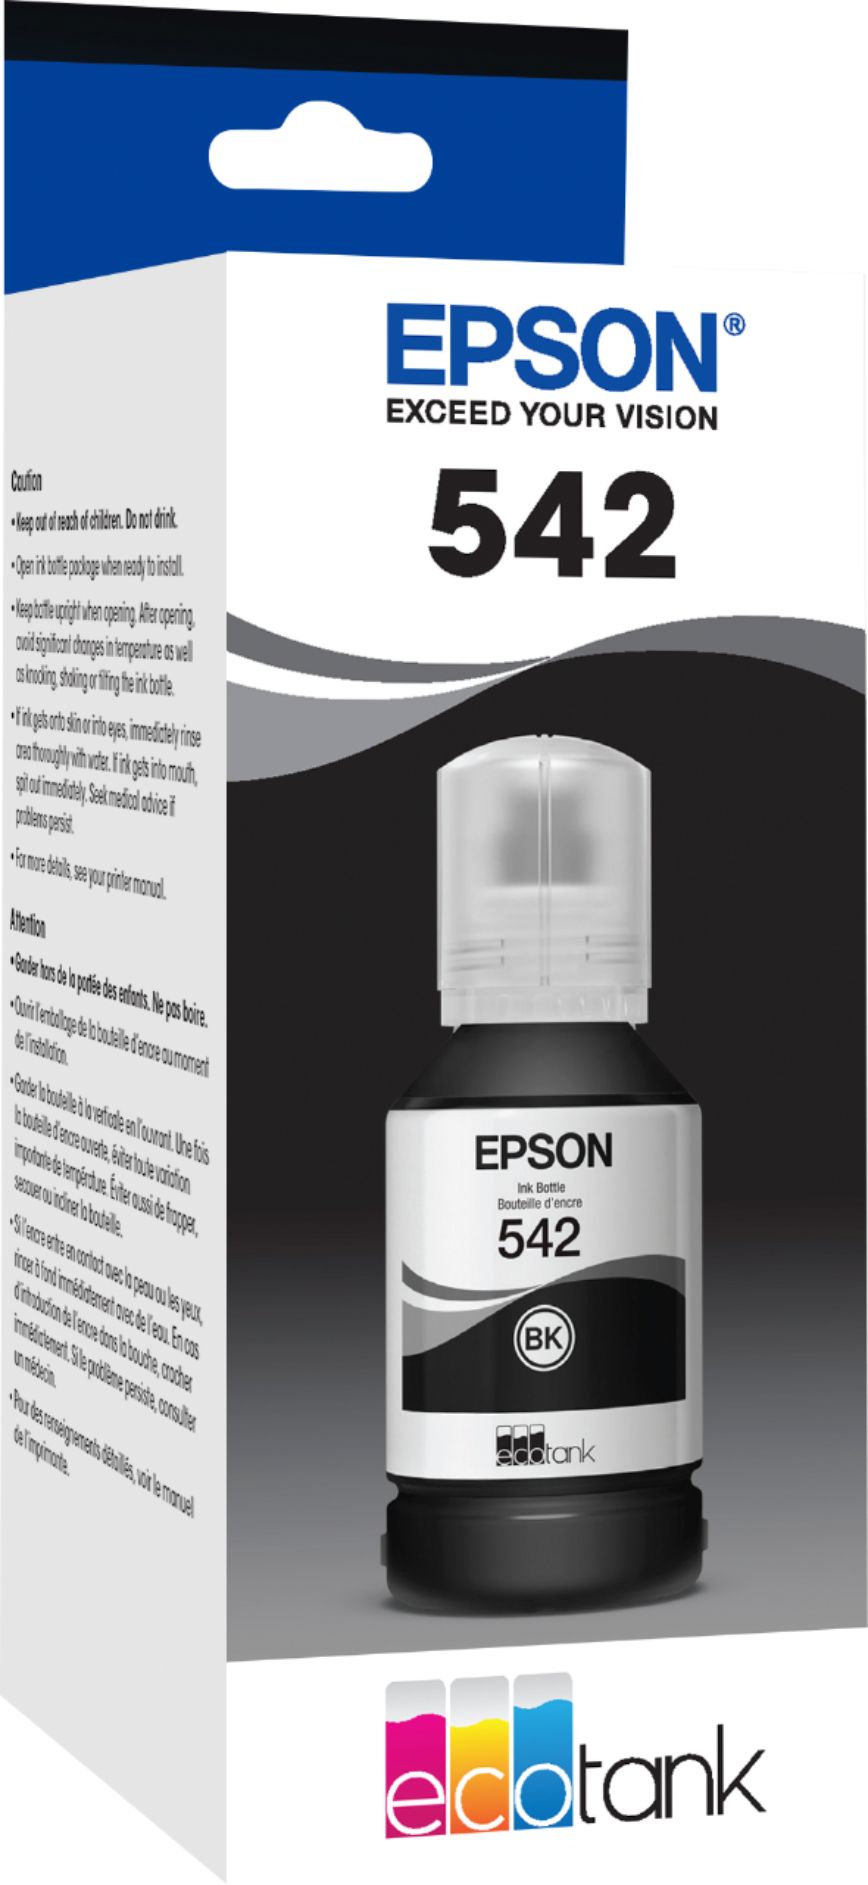 Epson - 542 XL High-Yield - Black Ink Cartridge